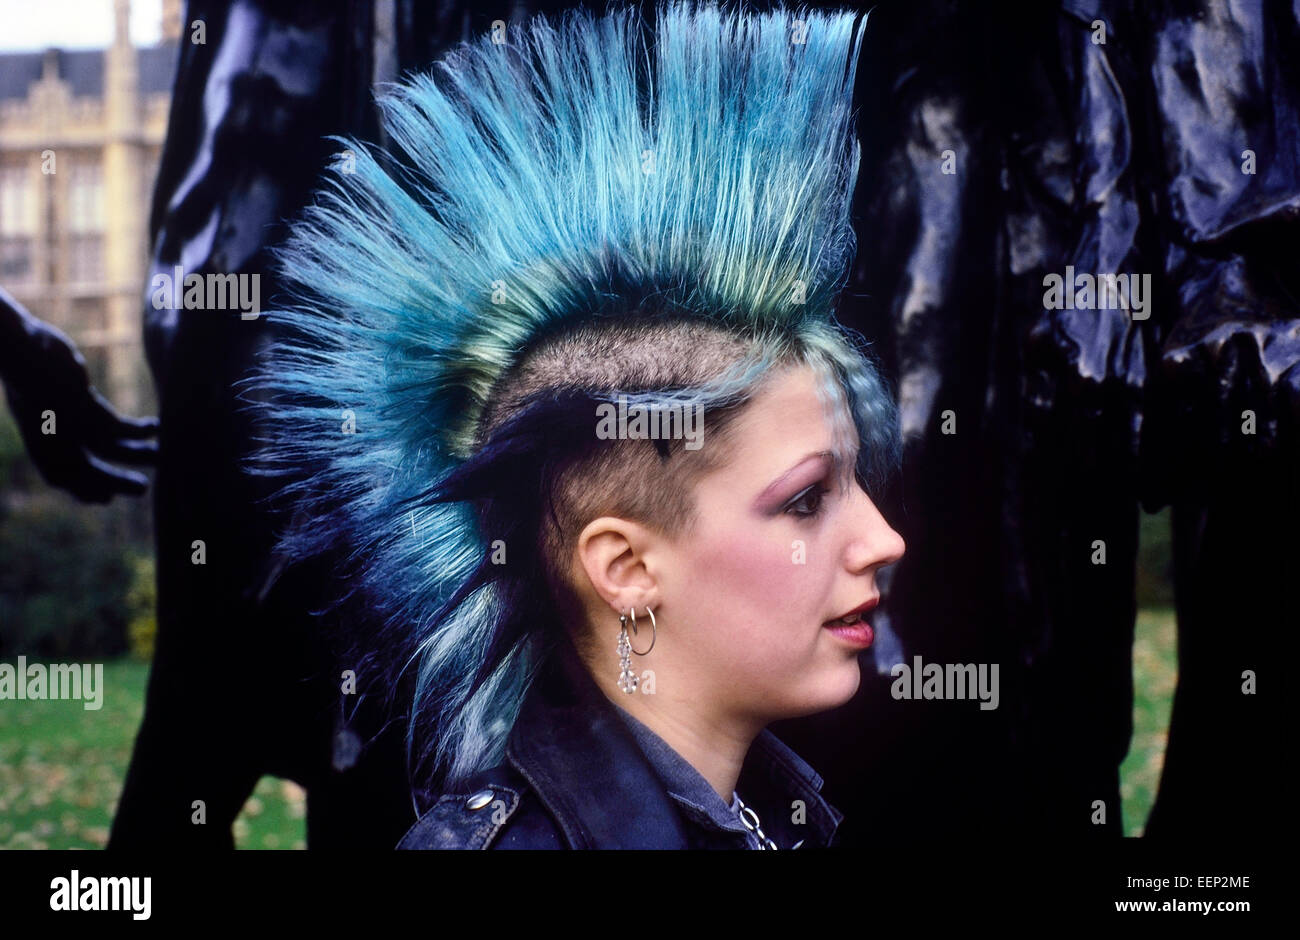 Blue hair punk girl - wide 7